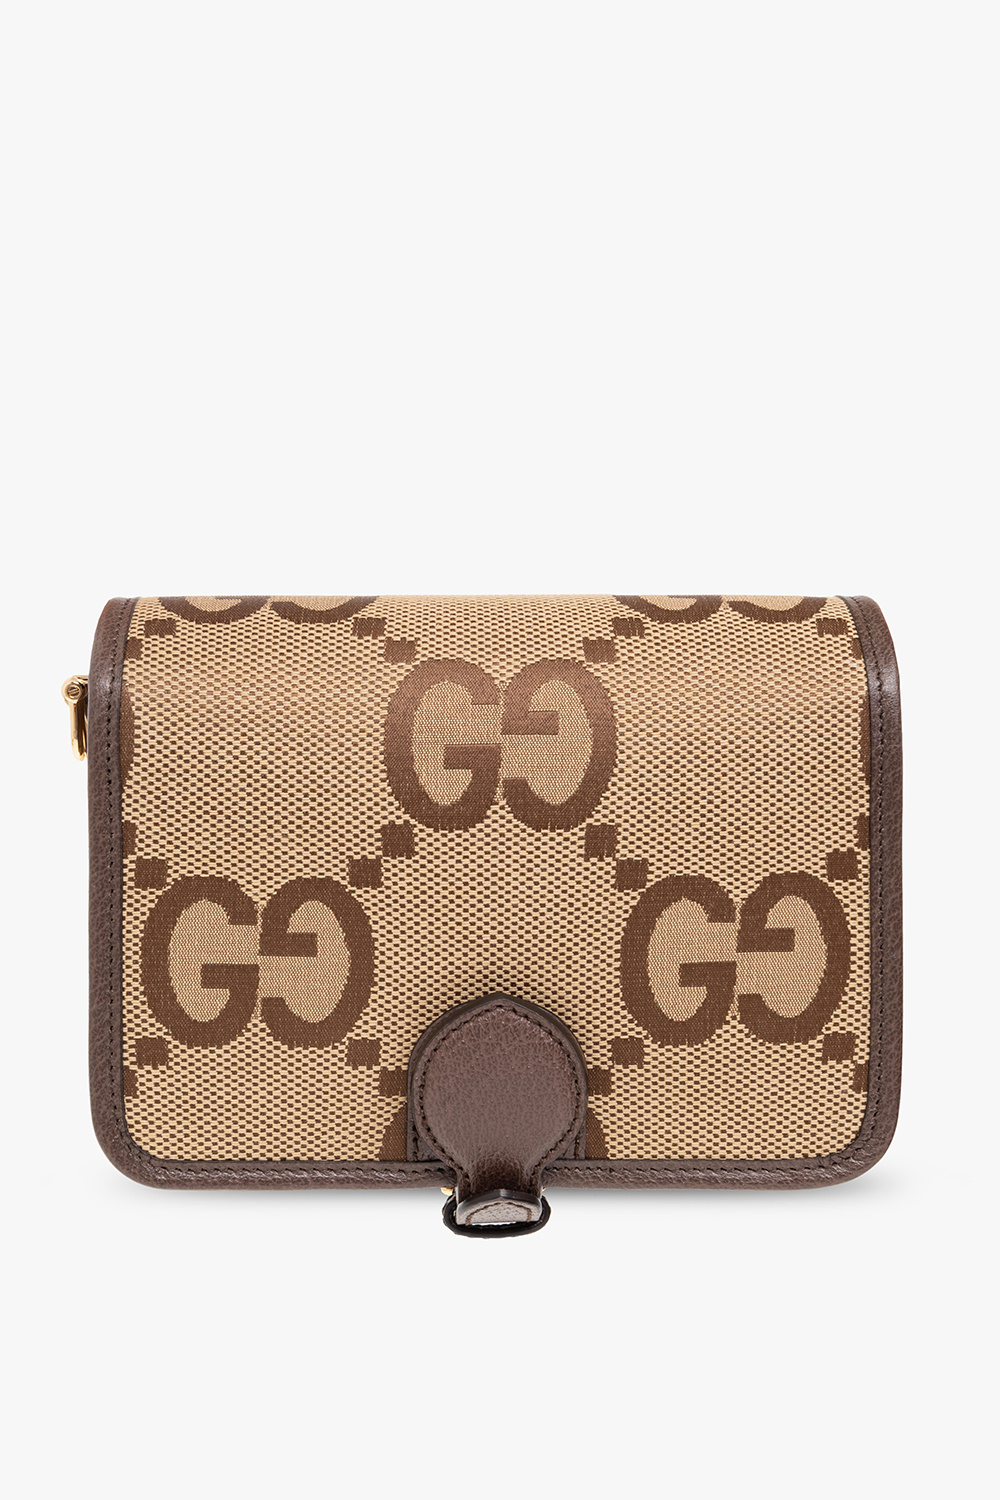 Gucci, Bags, Nwt Authentic Gucci Gg Soft Trunk Box Bag